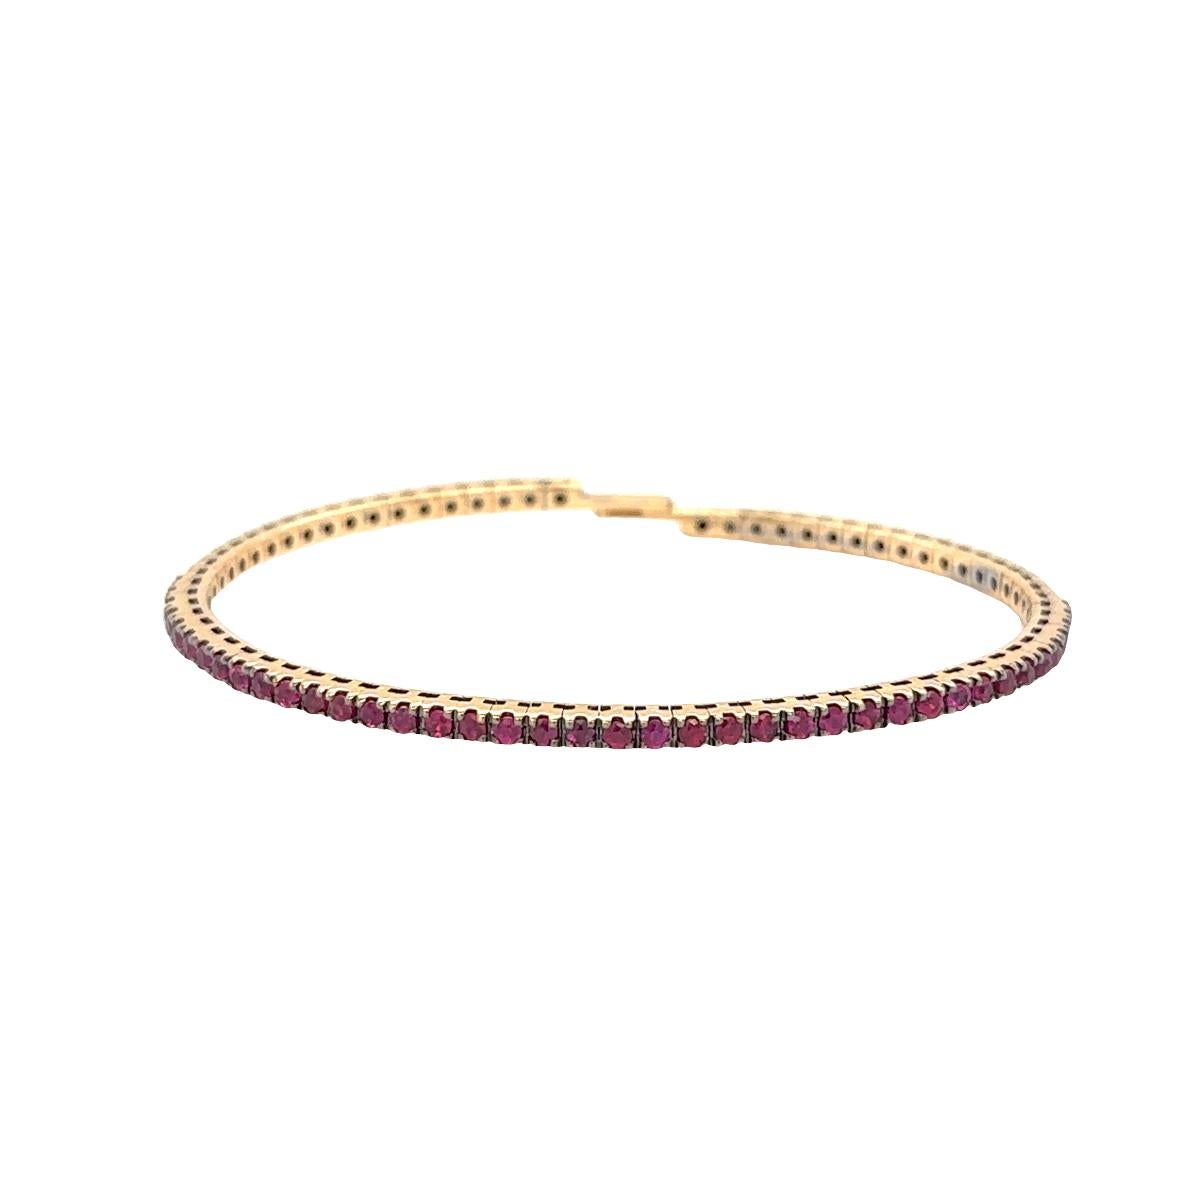 Taille ronde Bracelet tennis en or rose 18 carats en vente